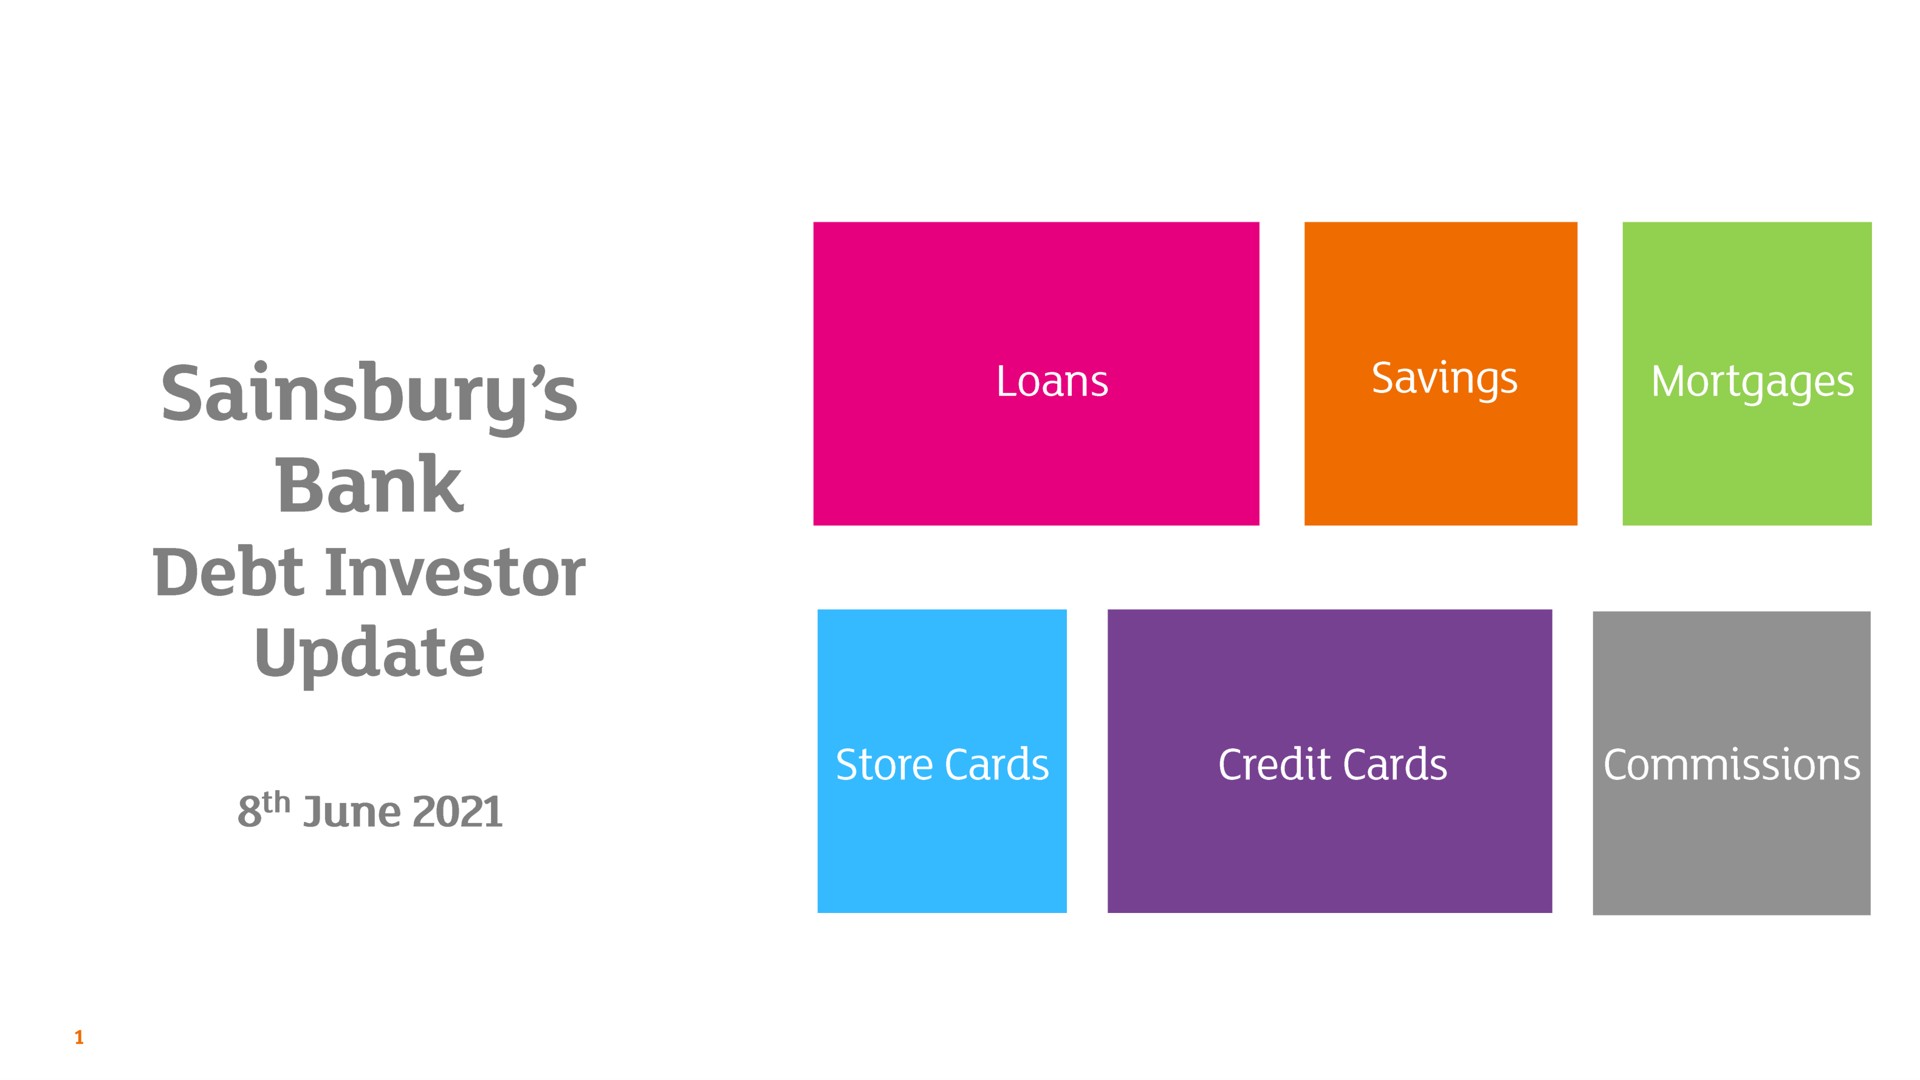 bank debt investor update | Sainsbury's